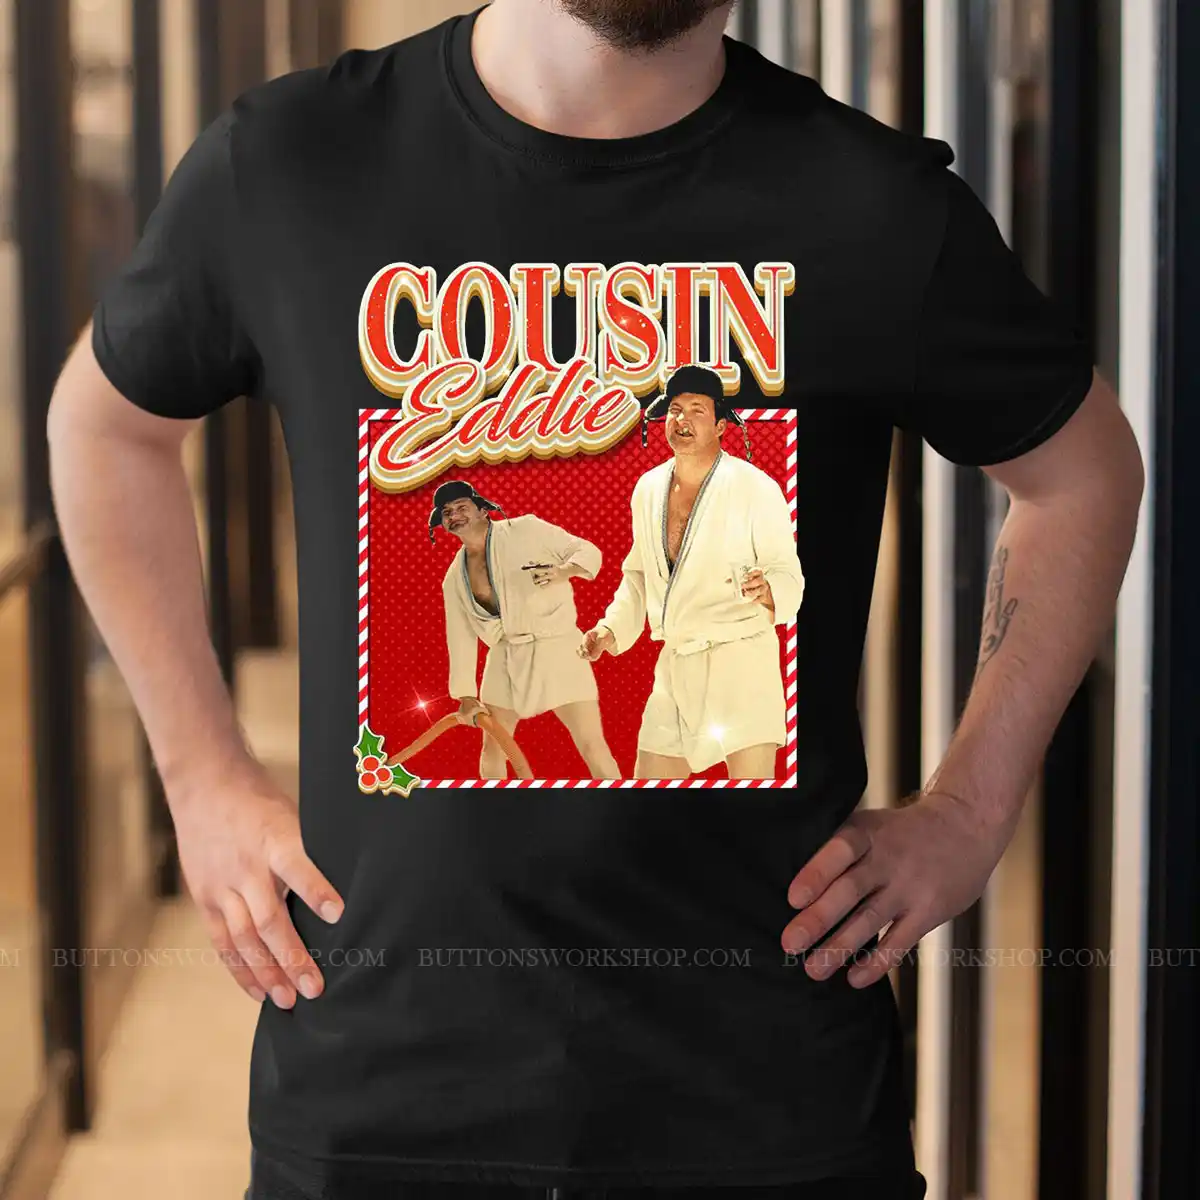 Cousin Eddie T Shirt Unisex Tshirt